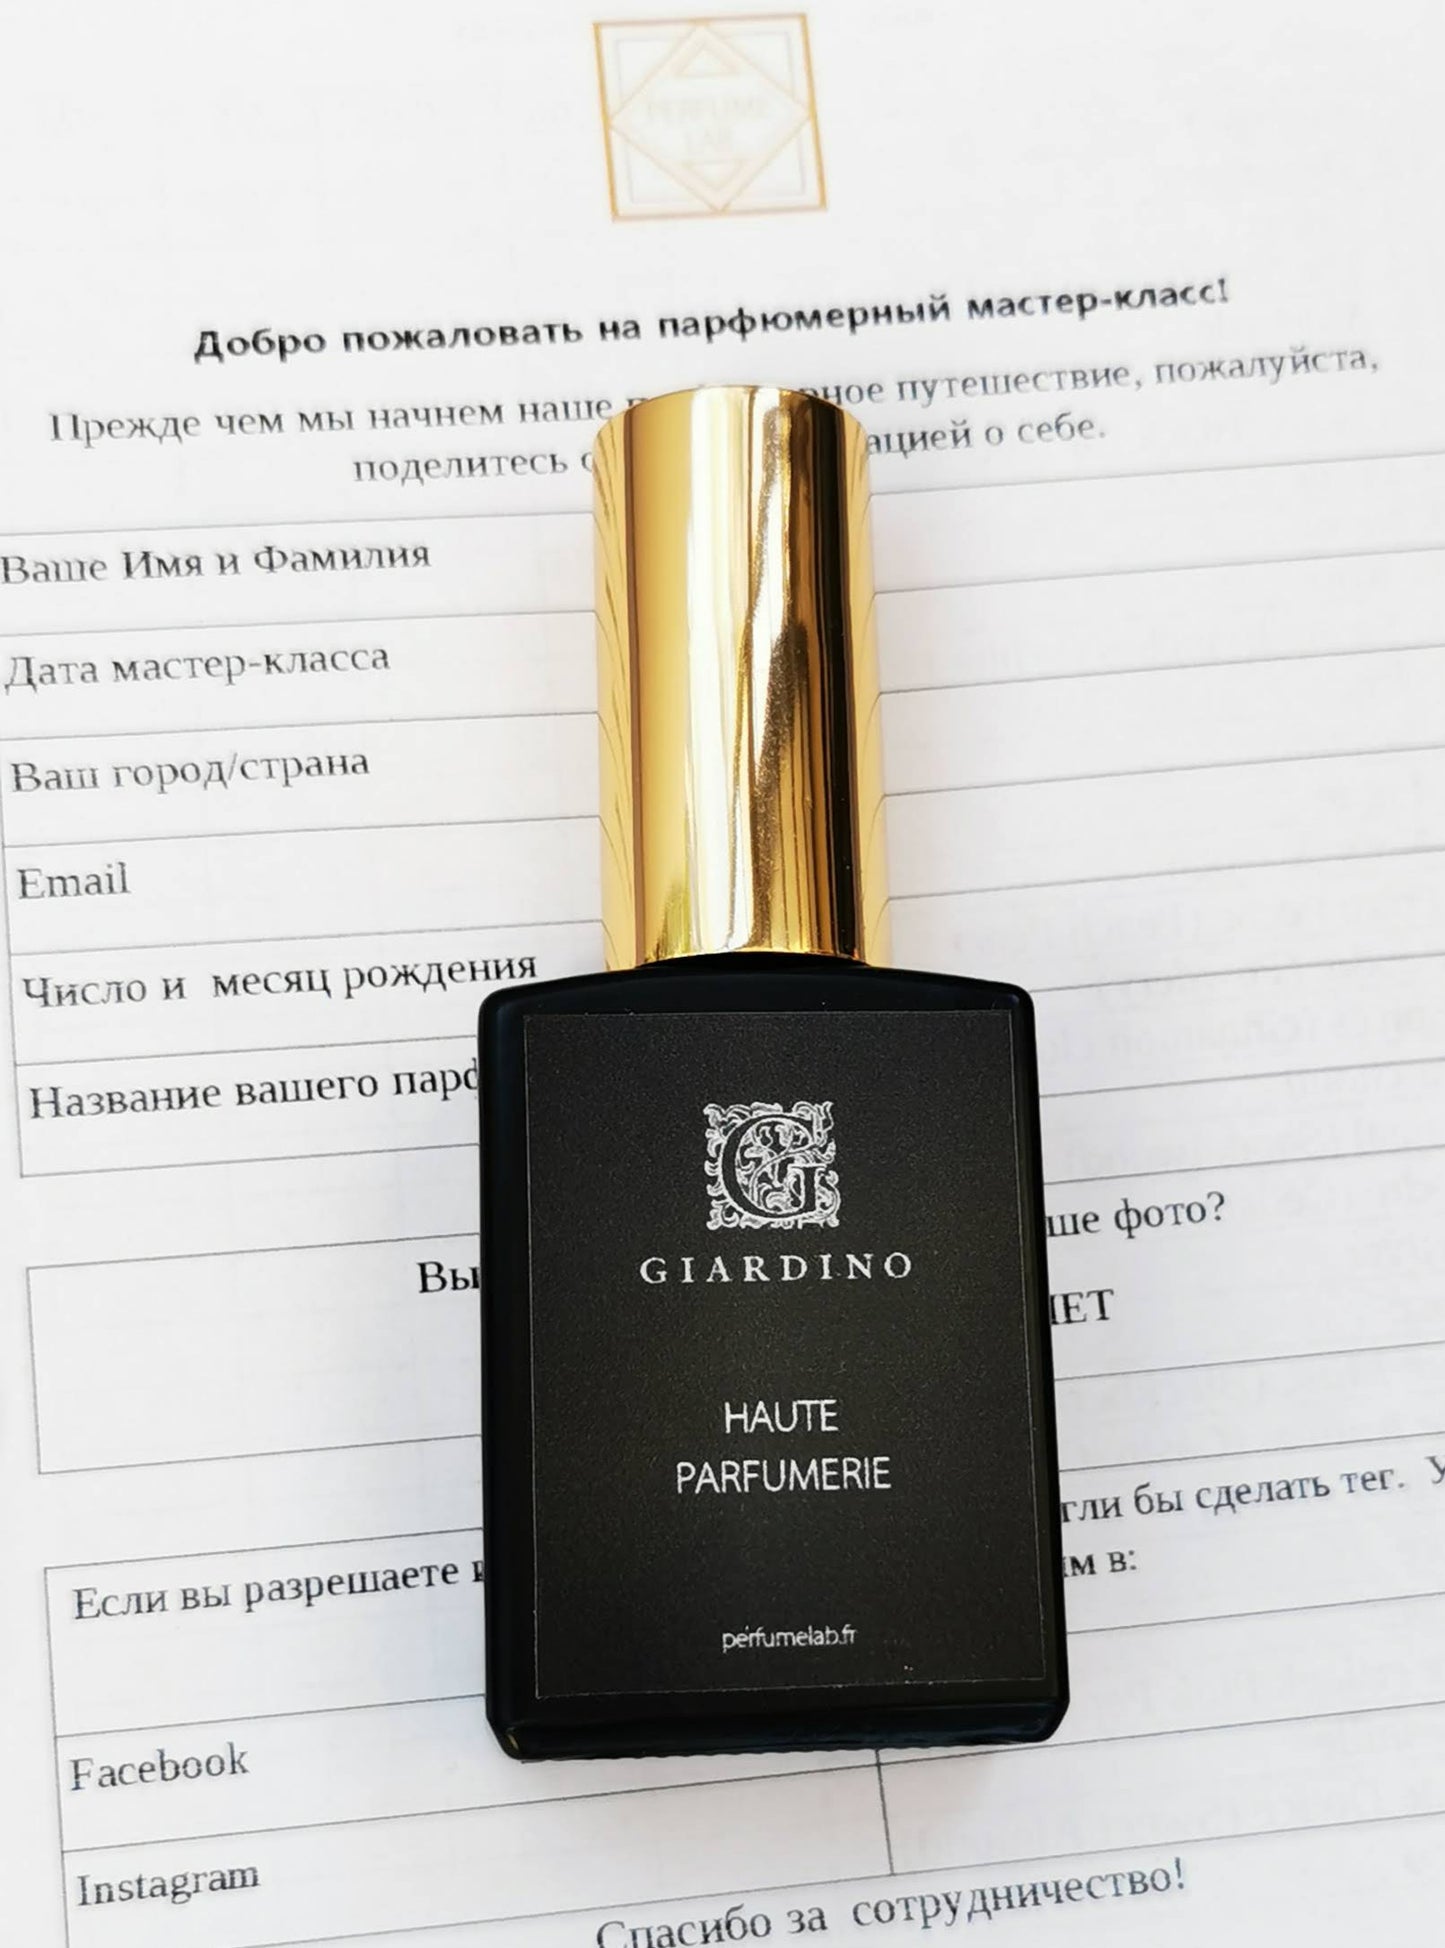 Perfume masterclass on December 10, 2023, at 14:30, at Pinot restaurant, Riga